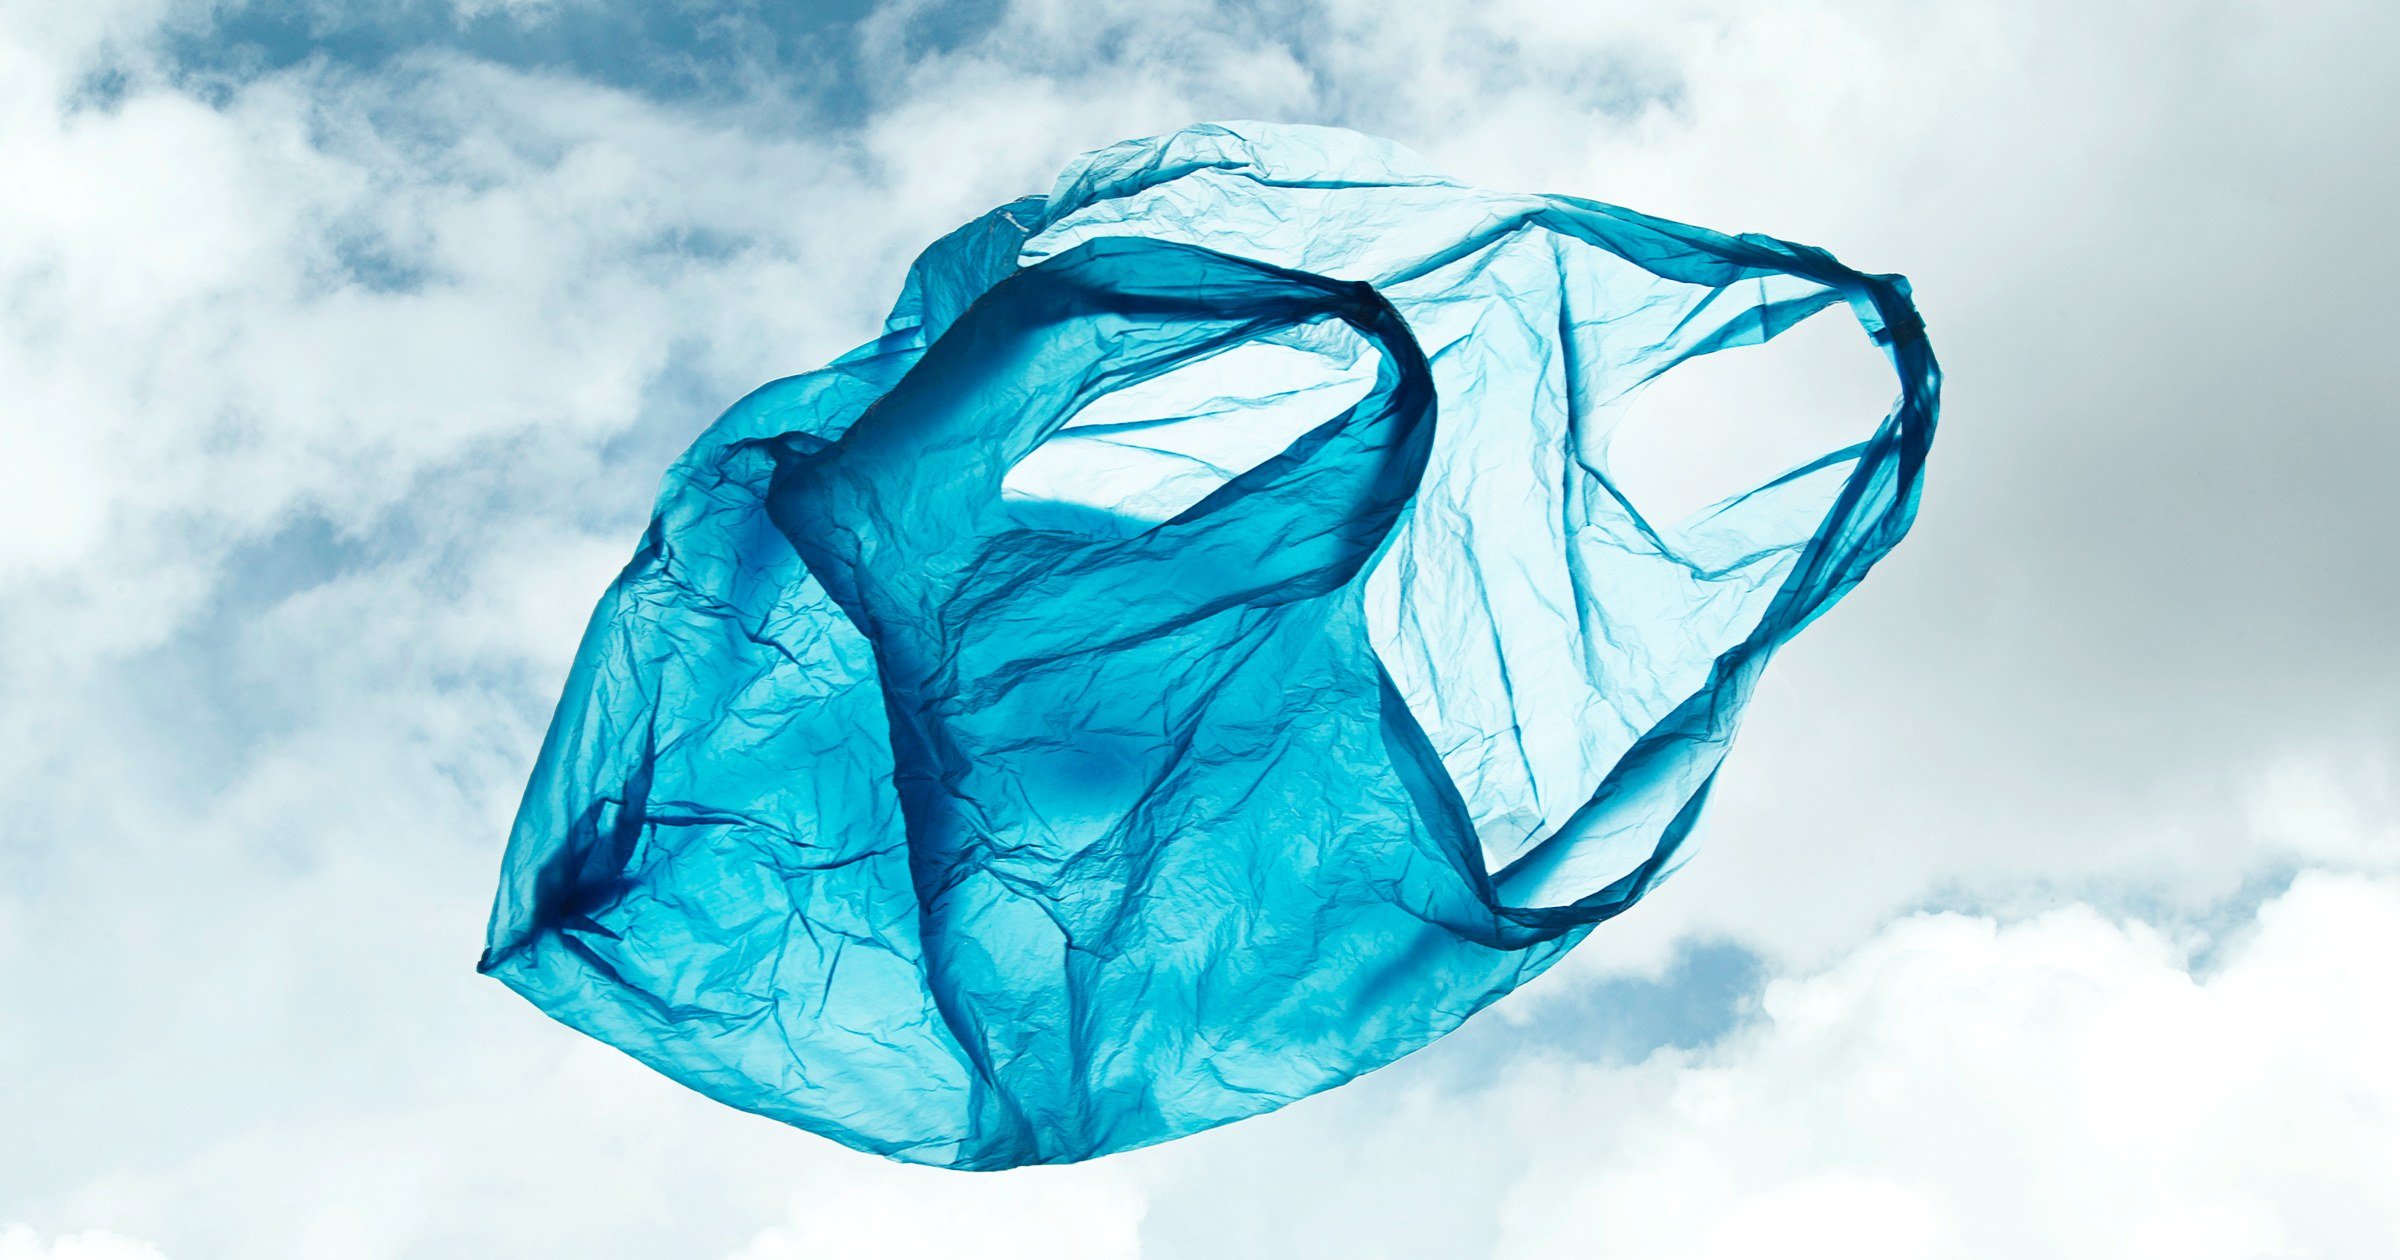 More information about "Ένας χρόνος χωρίς δωρεάν πλαστική σακούλα - 1,5 δις λιγότερες σακούλες από το 2017"